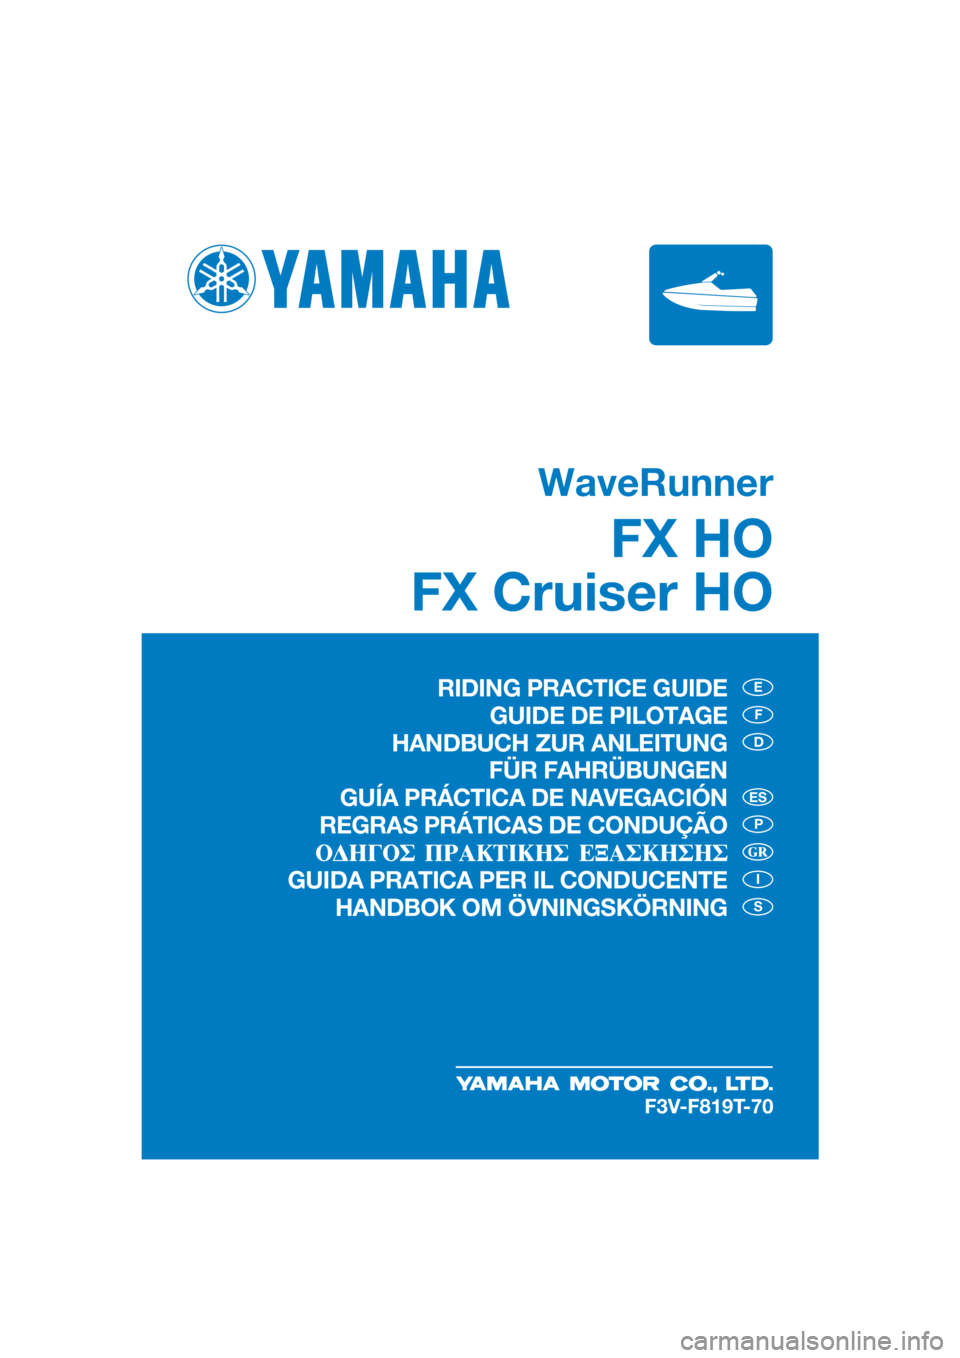 YAMAHA FX HO 2019  Manuale de Empleo (in Spanish) WaveRunner
FX HO
FX Cruiser HO
E
F
D
P
I
S
ES
F3V-F819T-70
RIDING PRACTICE GUIDE
GUIDE DE PILOTAGE
HANDBUCH ZUR ANLEITUNG
 FÜR FAHRÜBUNGEN
GUÍA PRÁCTICA DE NAVEGACIÓN
REGRAS PRÁTICAS DE CONDUÇ�